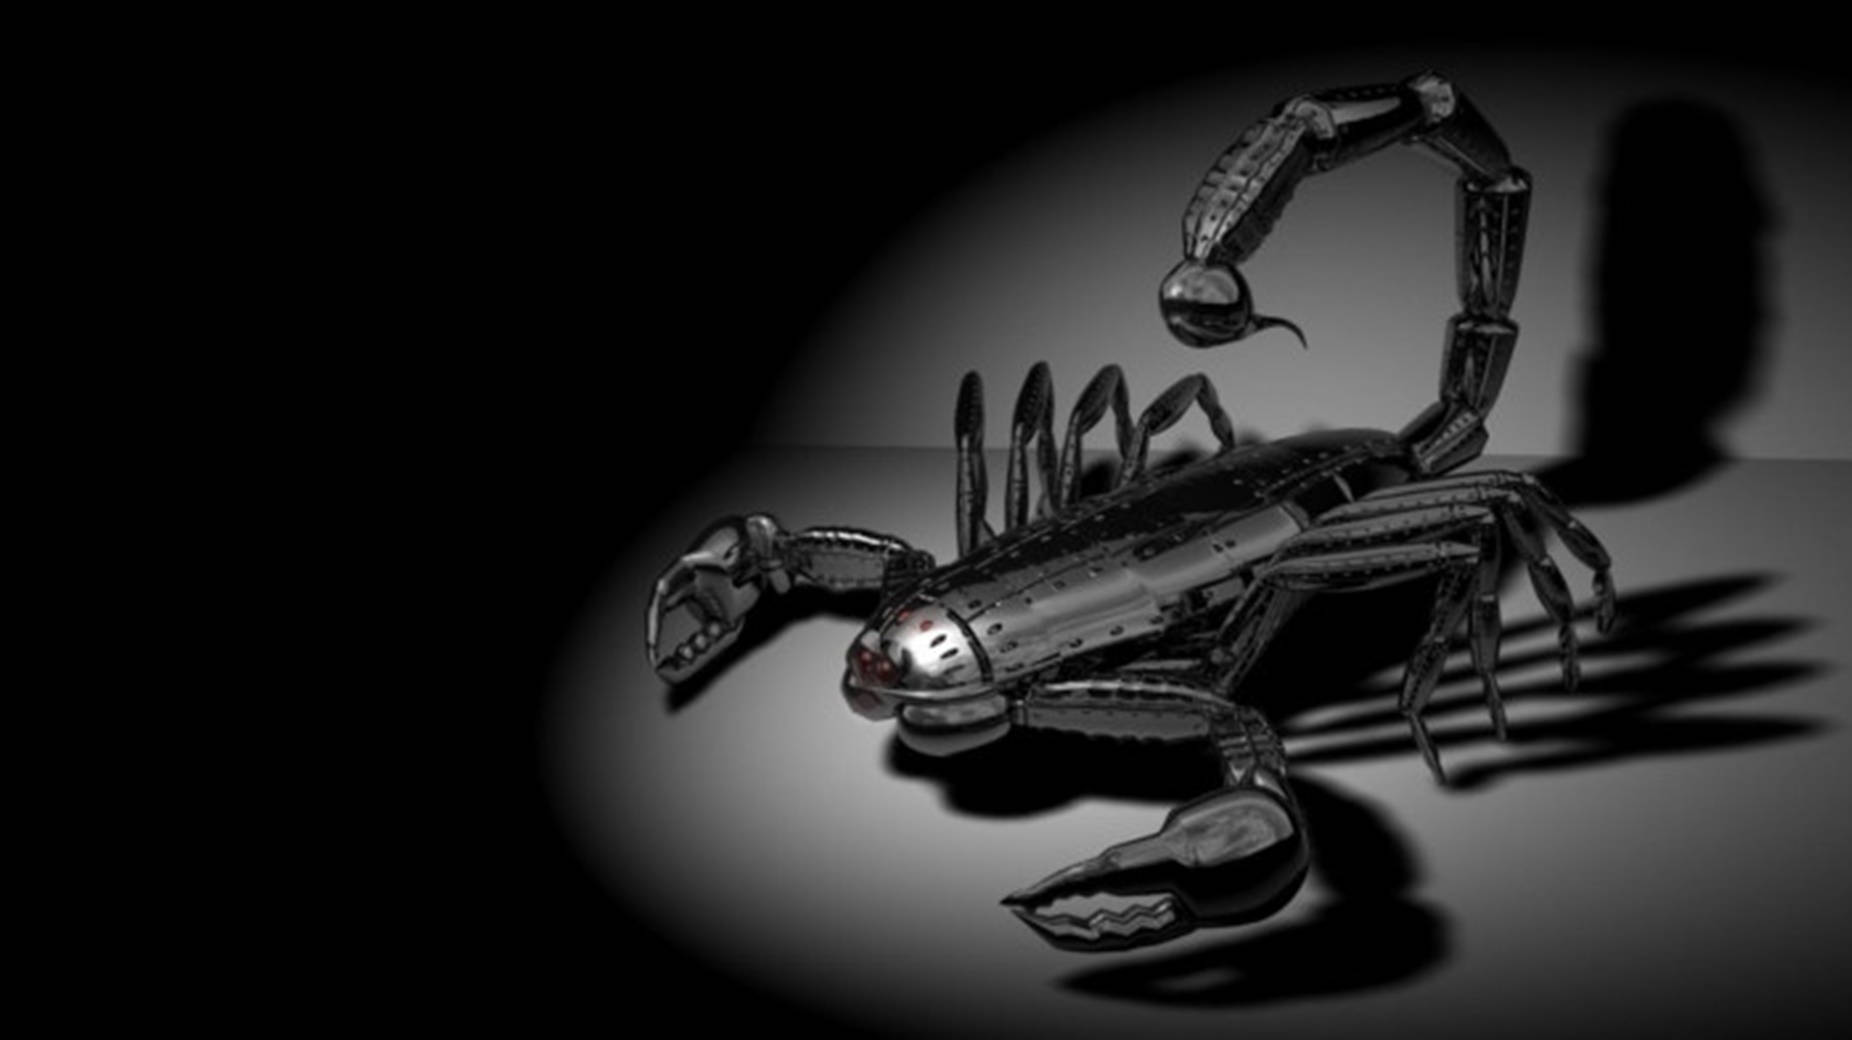 Scorpion Robot Black And White Wallpaper